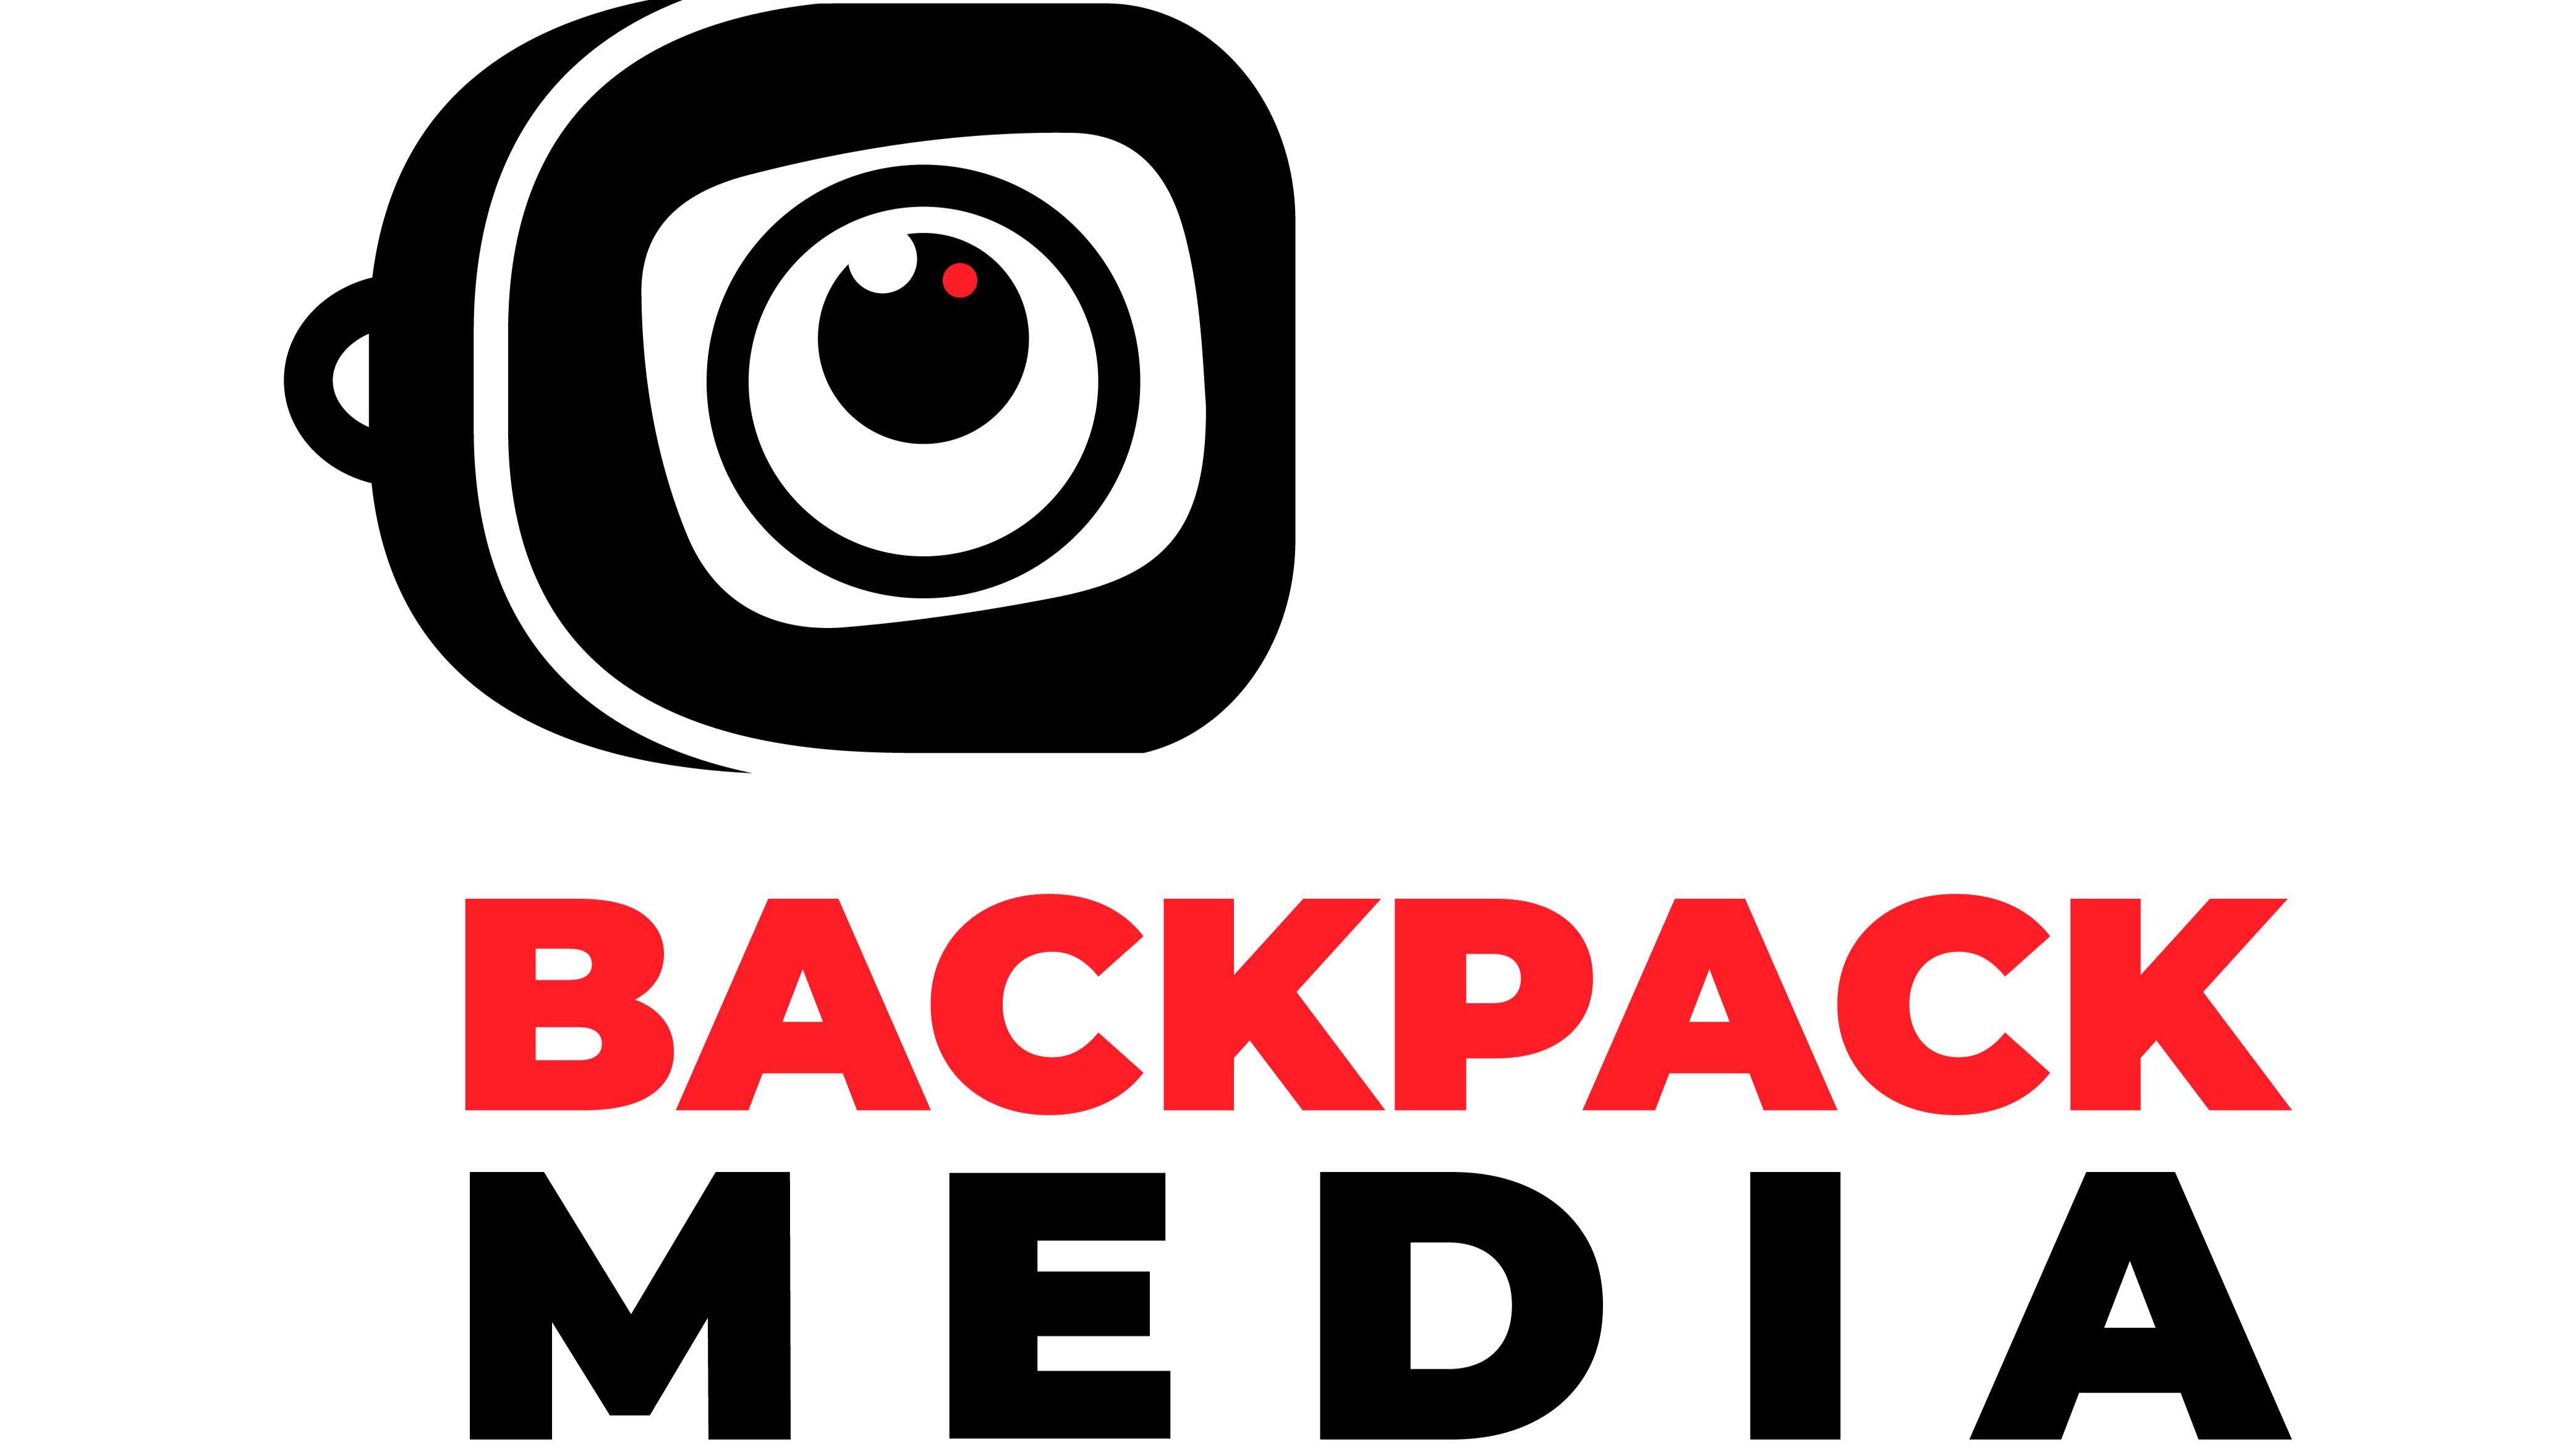 Backpack Media предлагает инновационную городскую рекламу на рюкзаках с Full HD экранами.